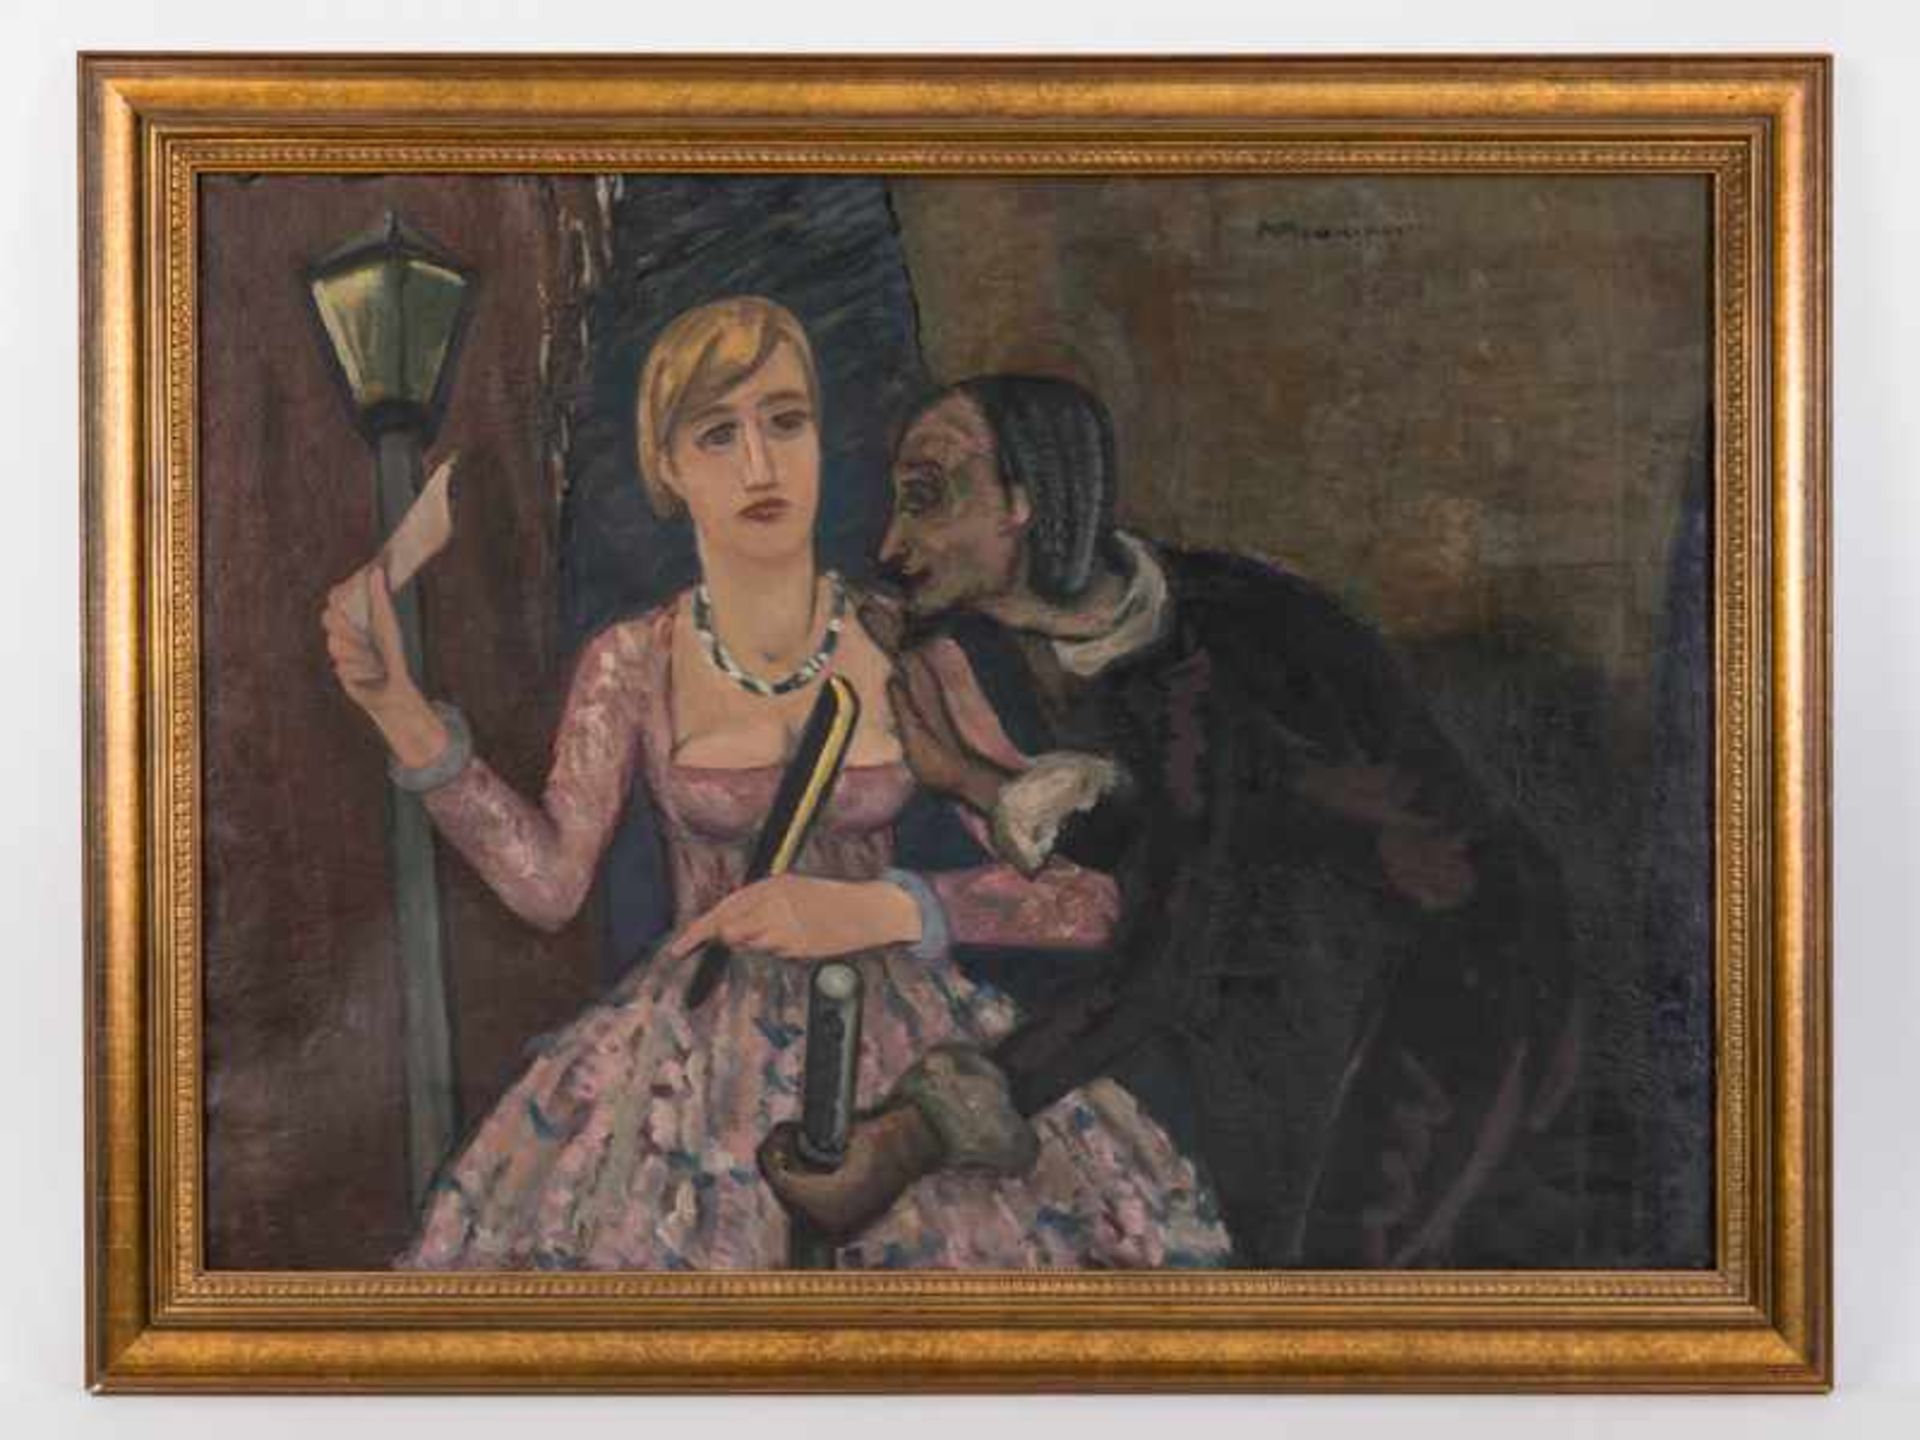 Neumann, Max (1885-1973). "Commedia"; Öl auf Leinwand; oben rechts signiert; Maße ca. 64,5 x 90